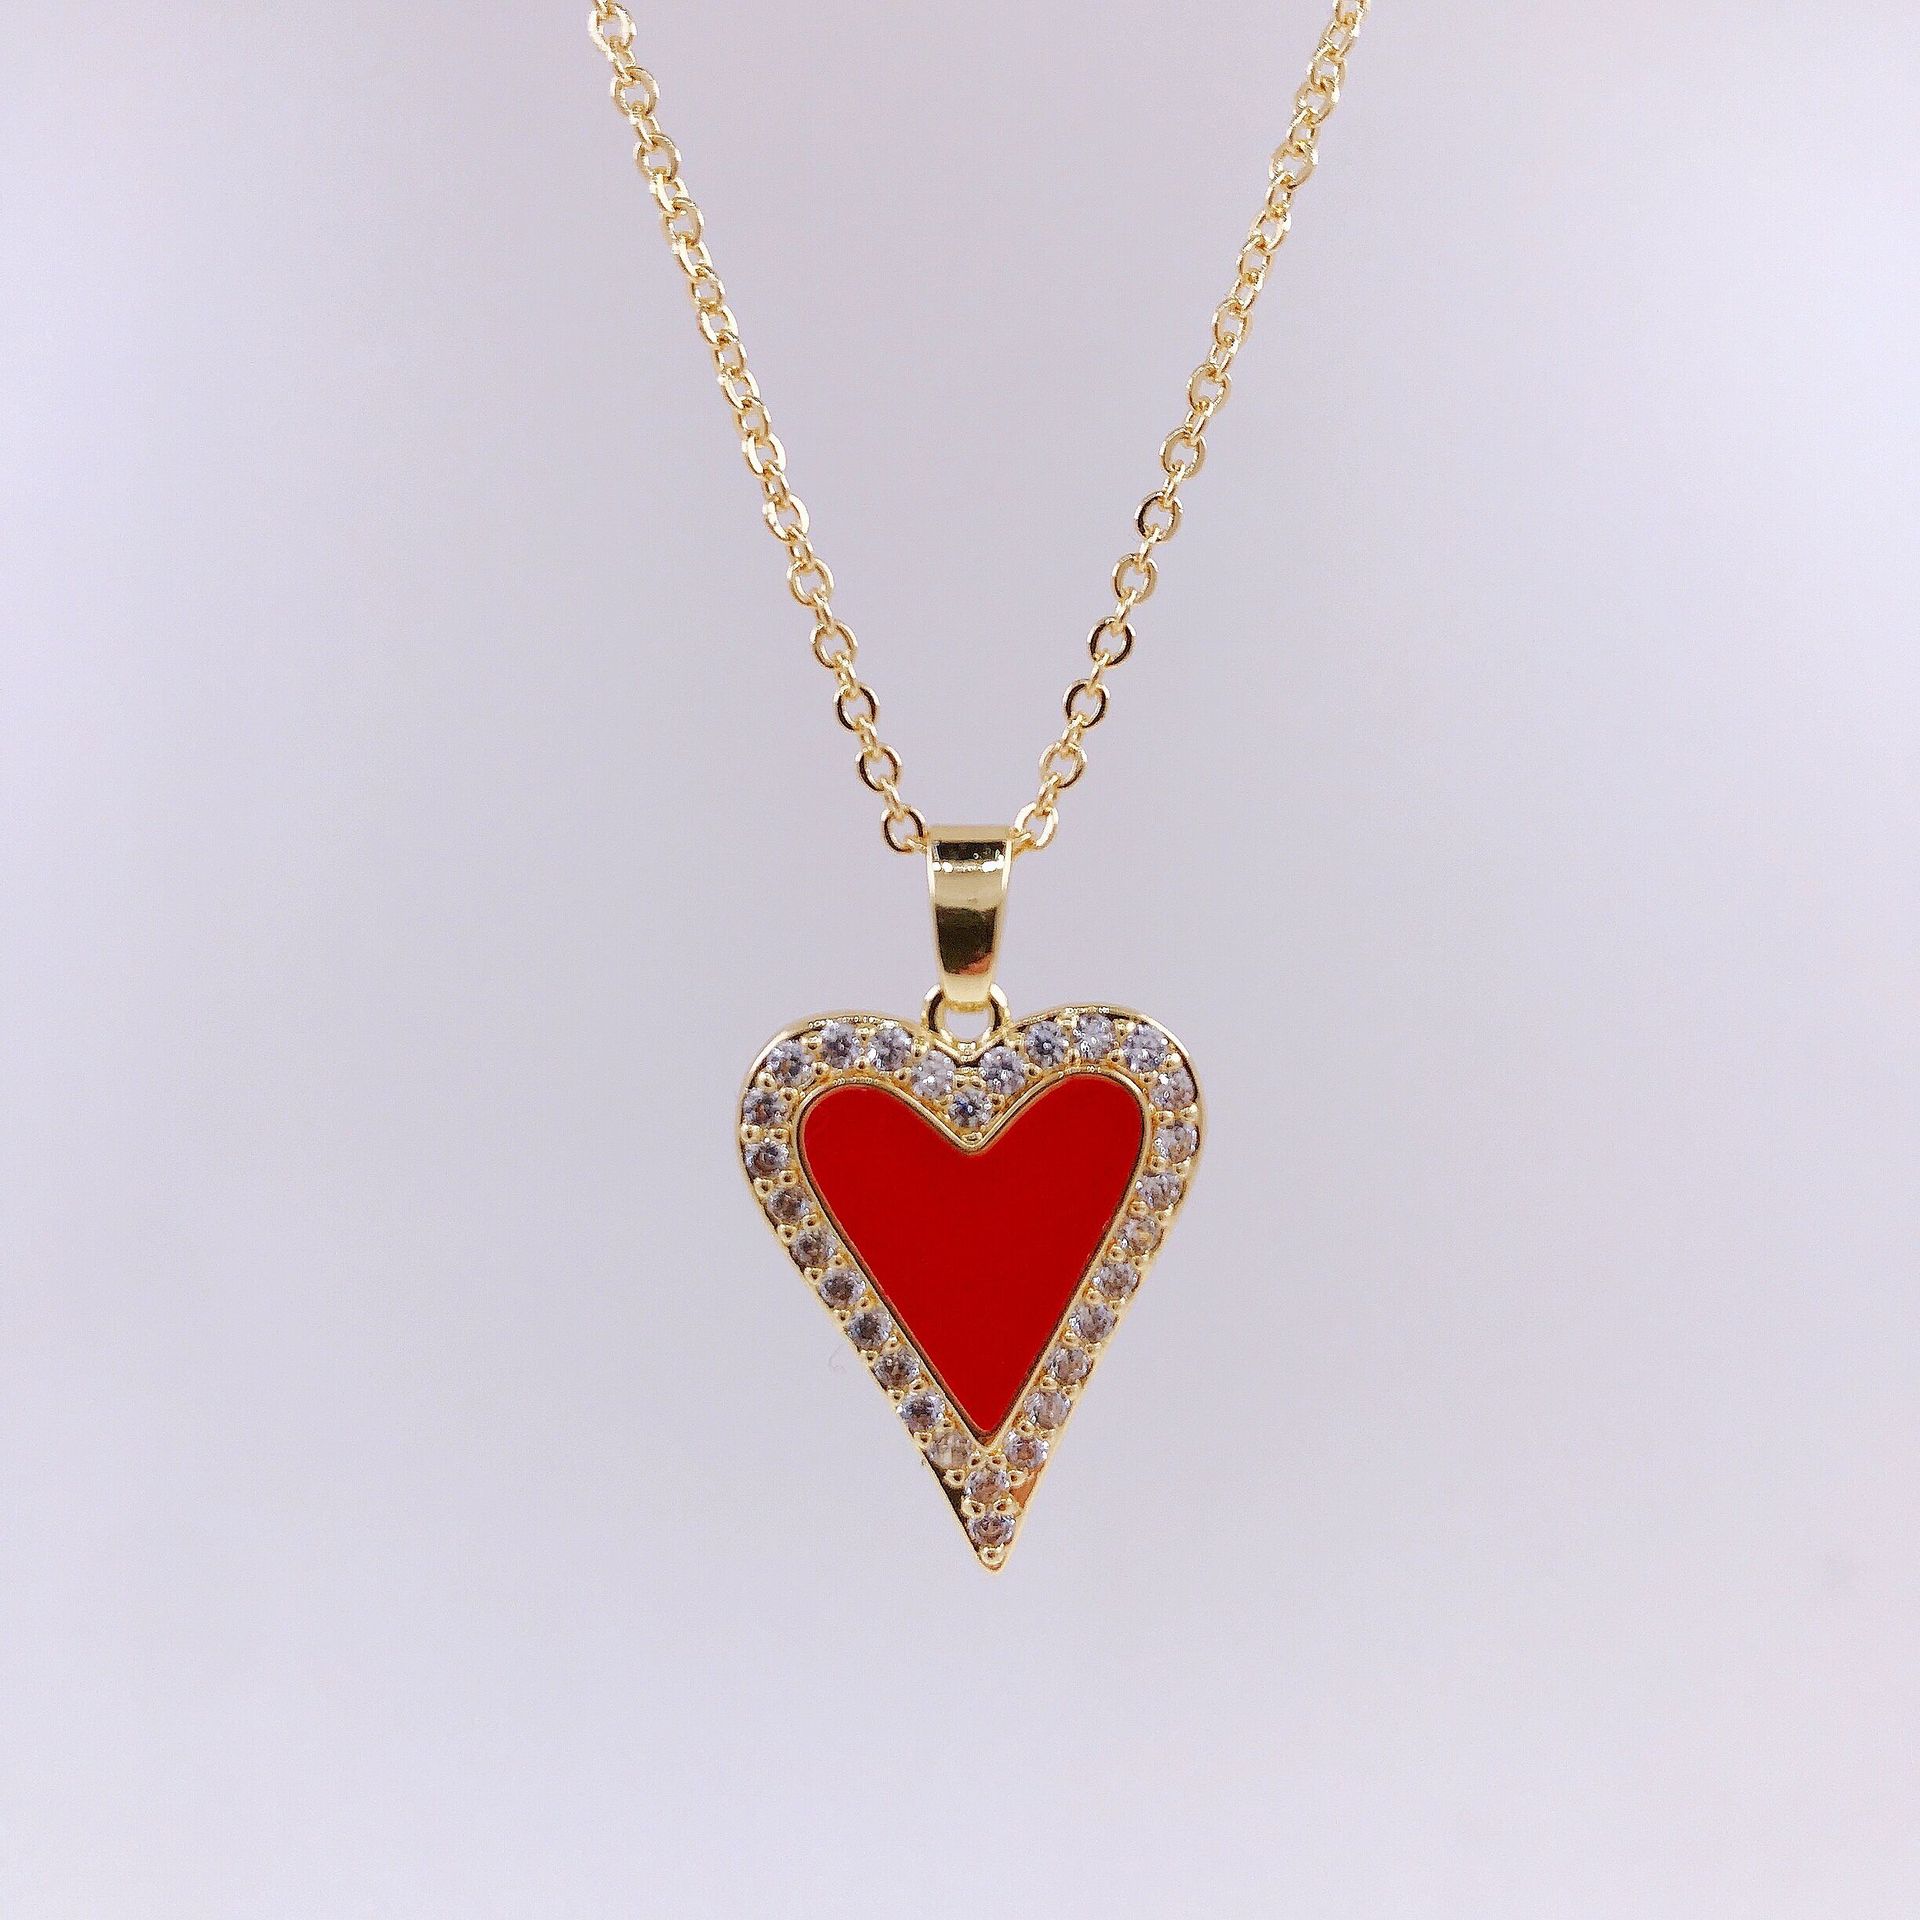 10pcs Gold Tone Crystal Red Acrylic Heart Pendant Necklace|GCJ302|UK SELLER